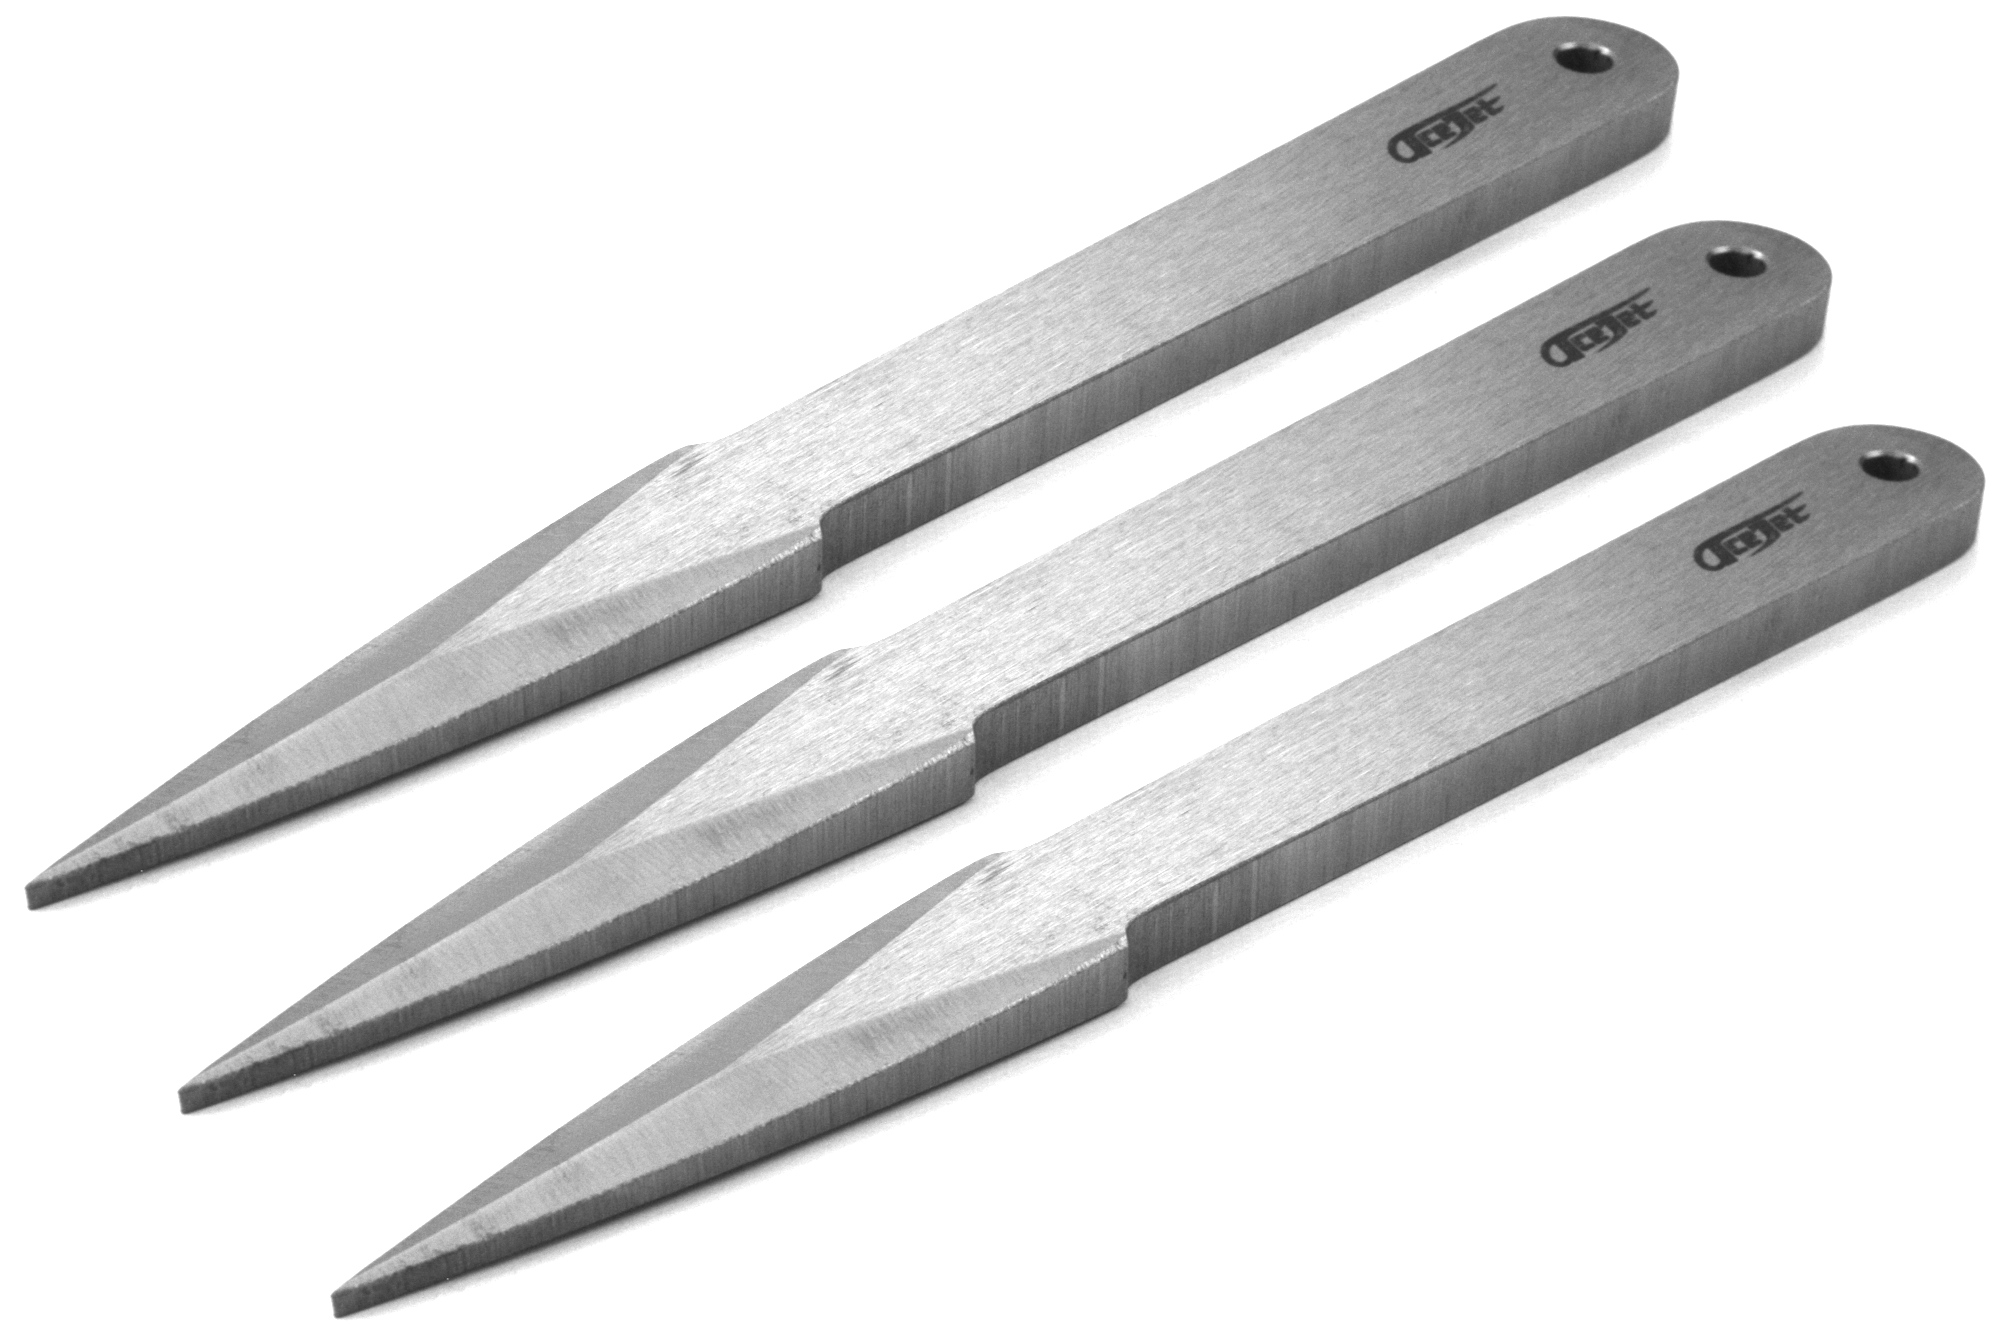 ACEJET BREAKER CRUSHER - Throwing knife - set of 3